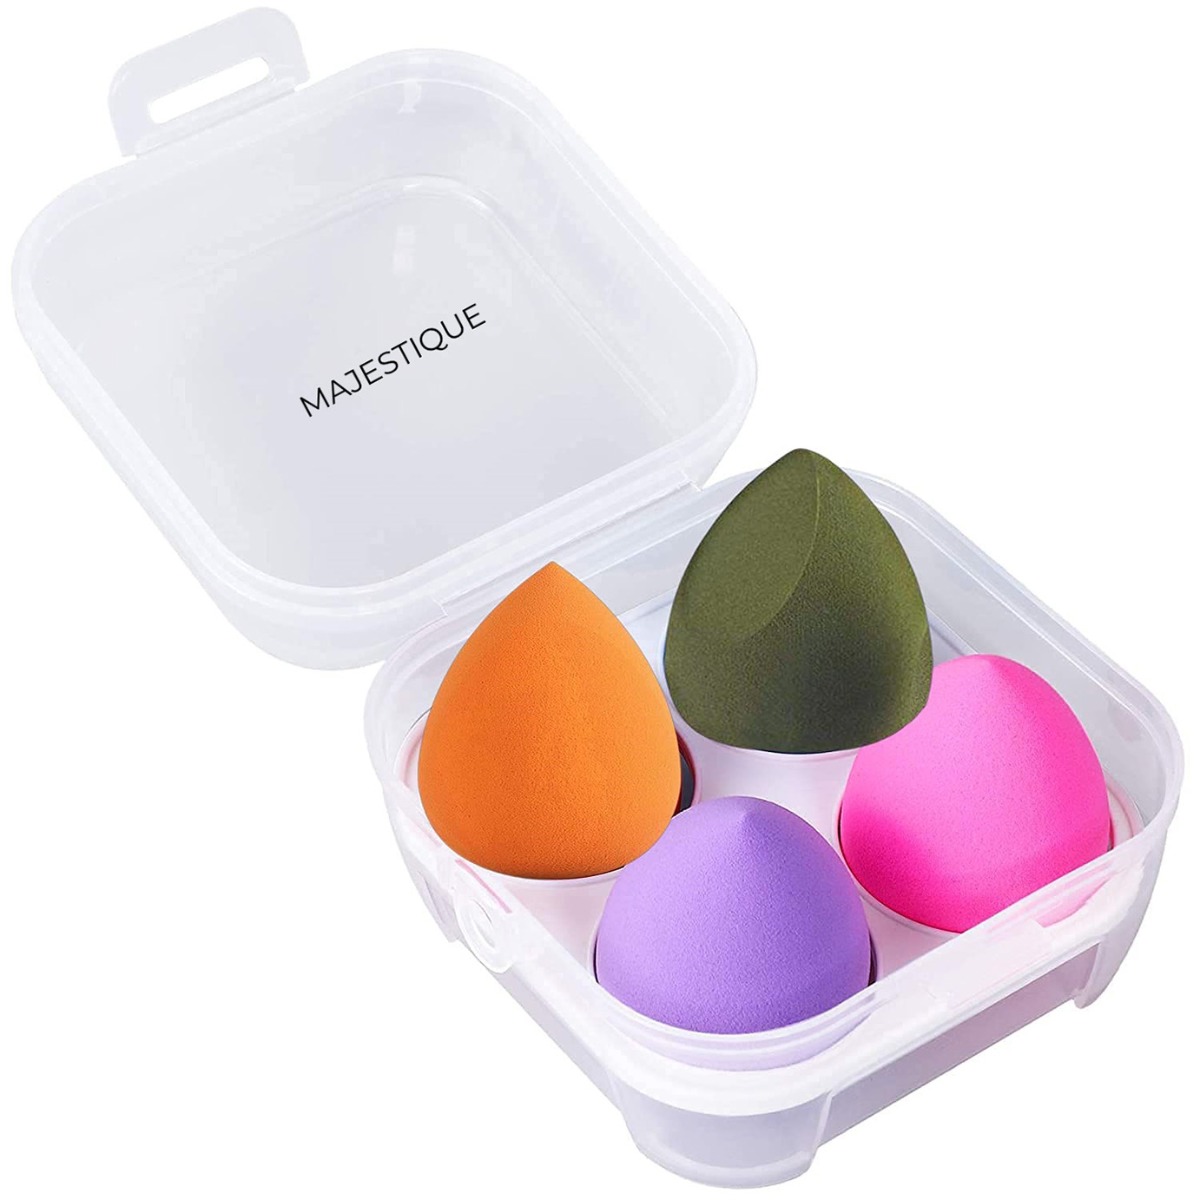 Majestique Makeup Sponges Blender Set With Packing Box - Pack Of 4